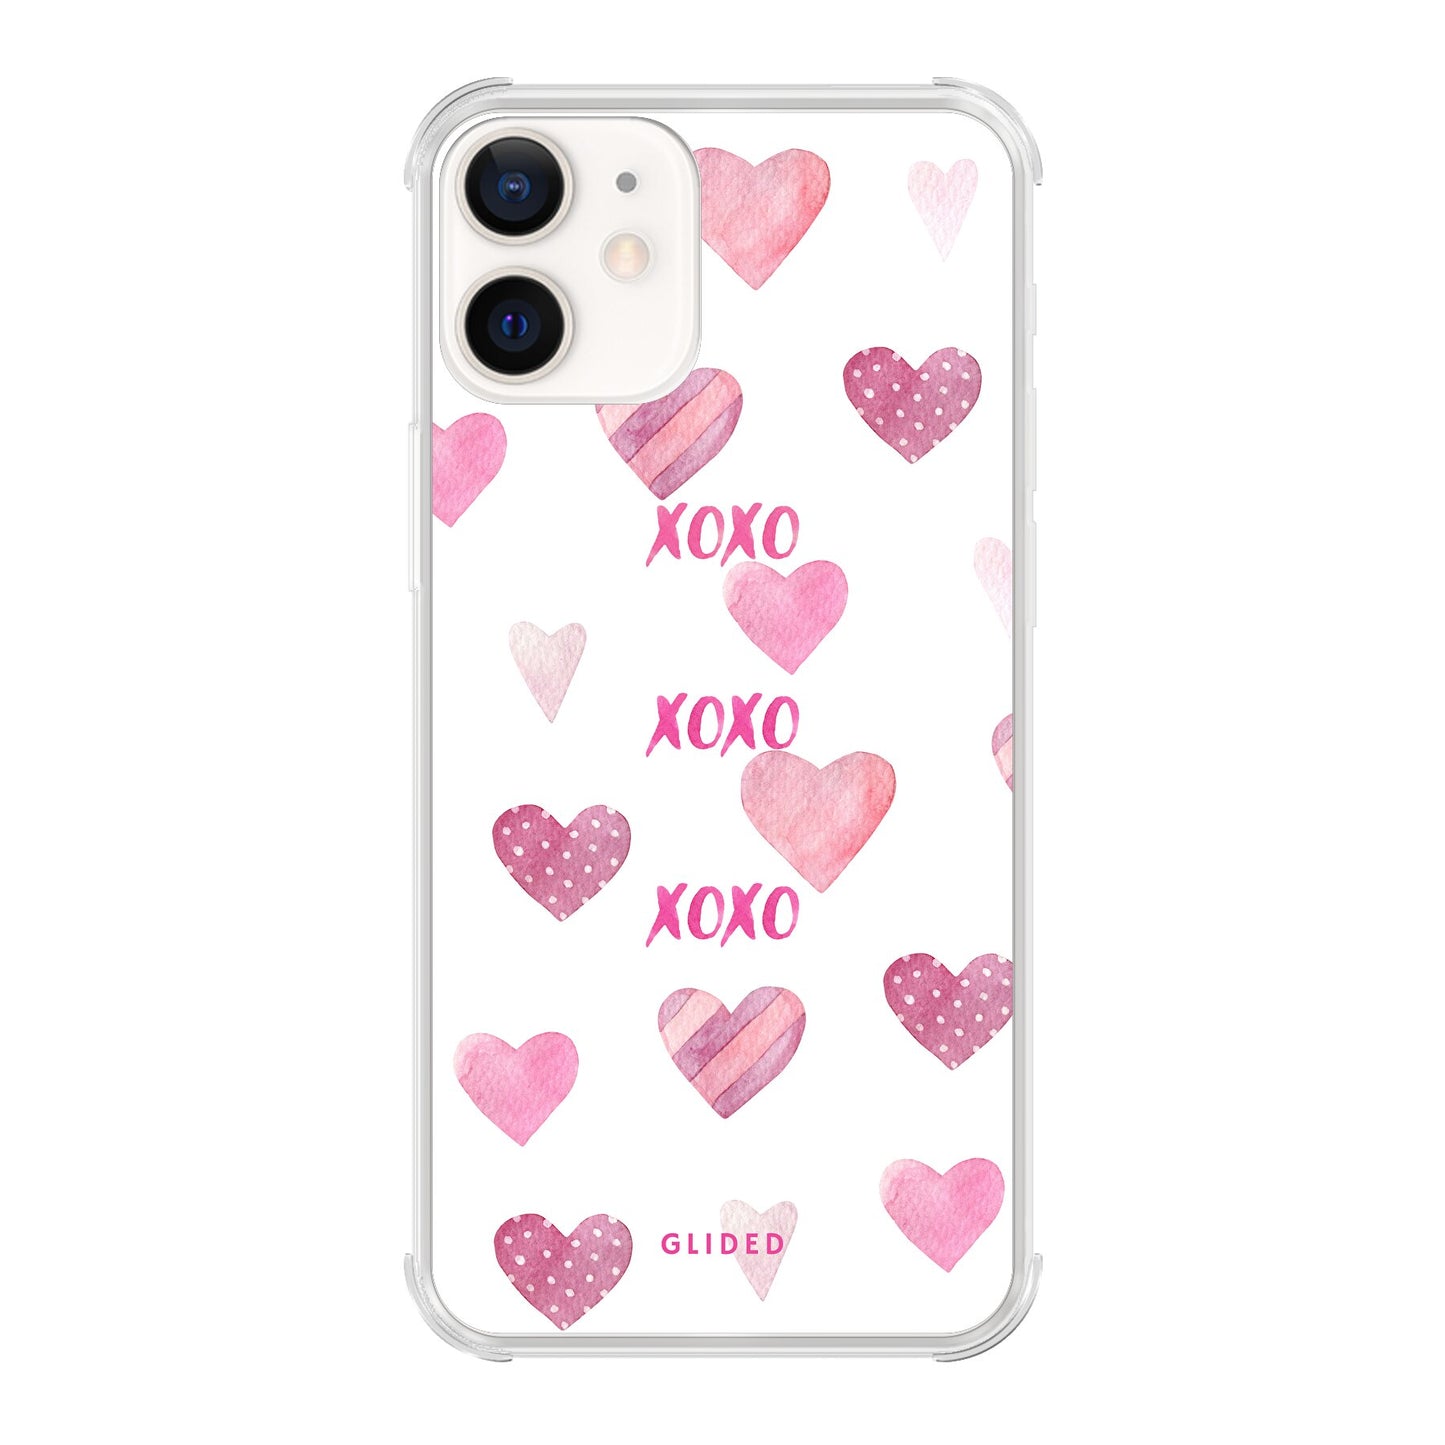 Xoxo - iPhone 12 - Bumper case